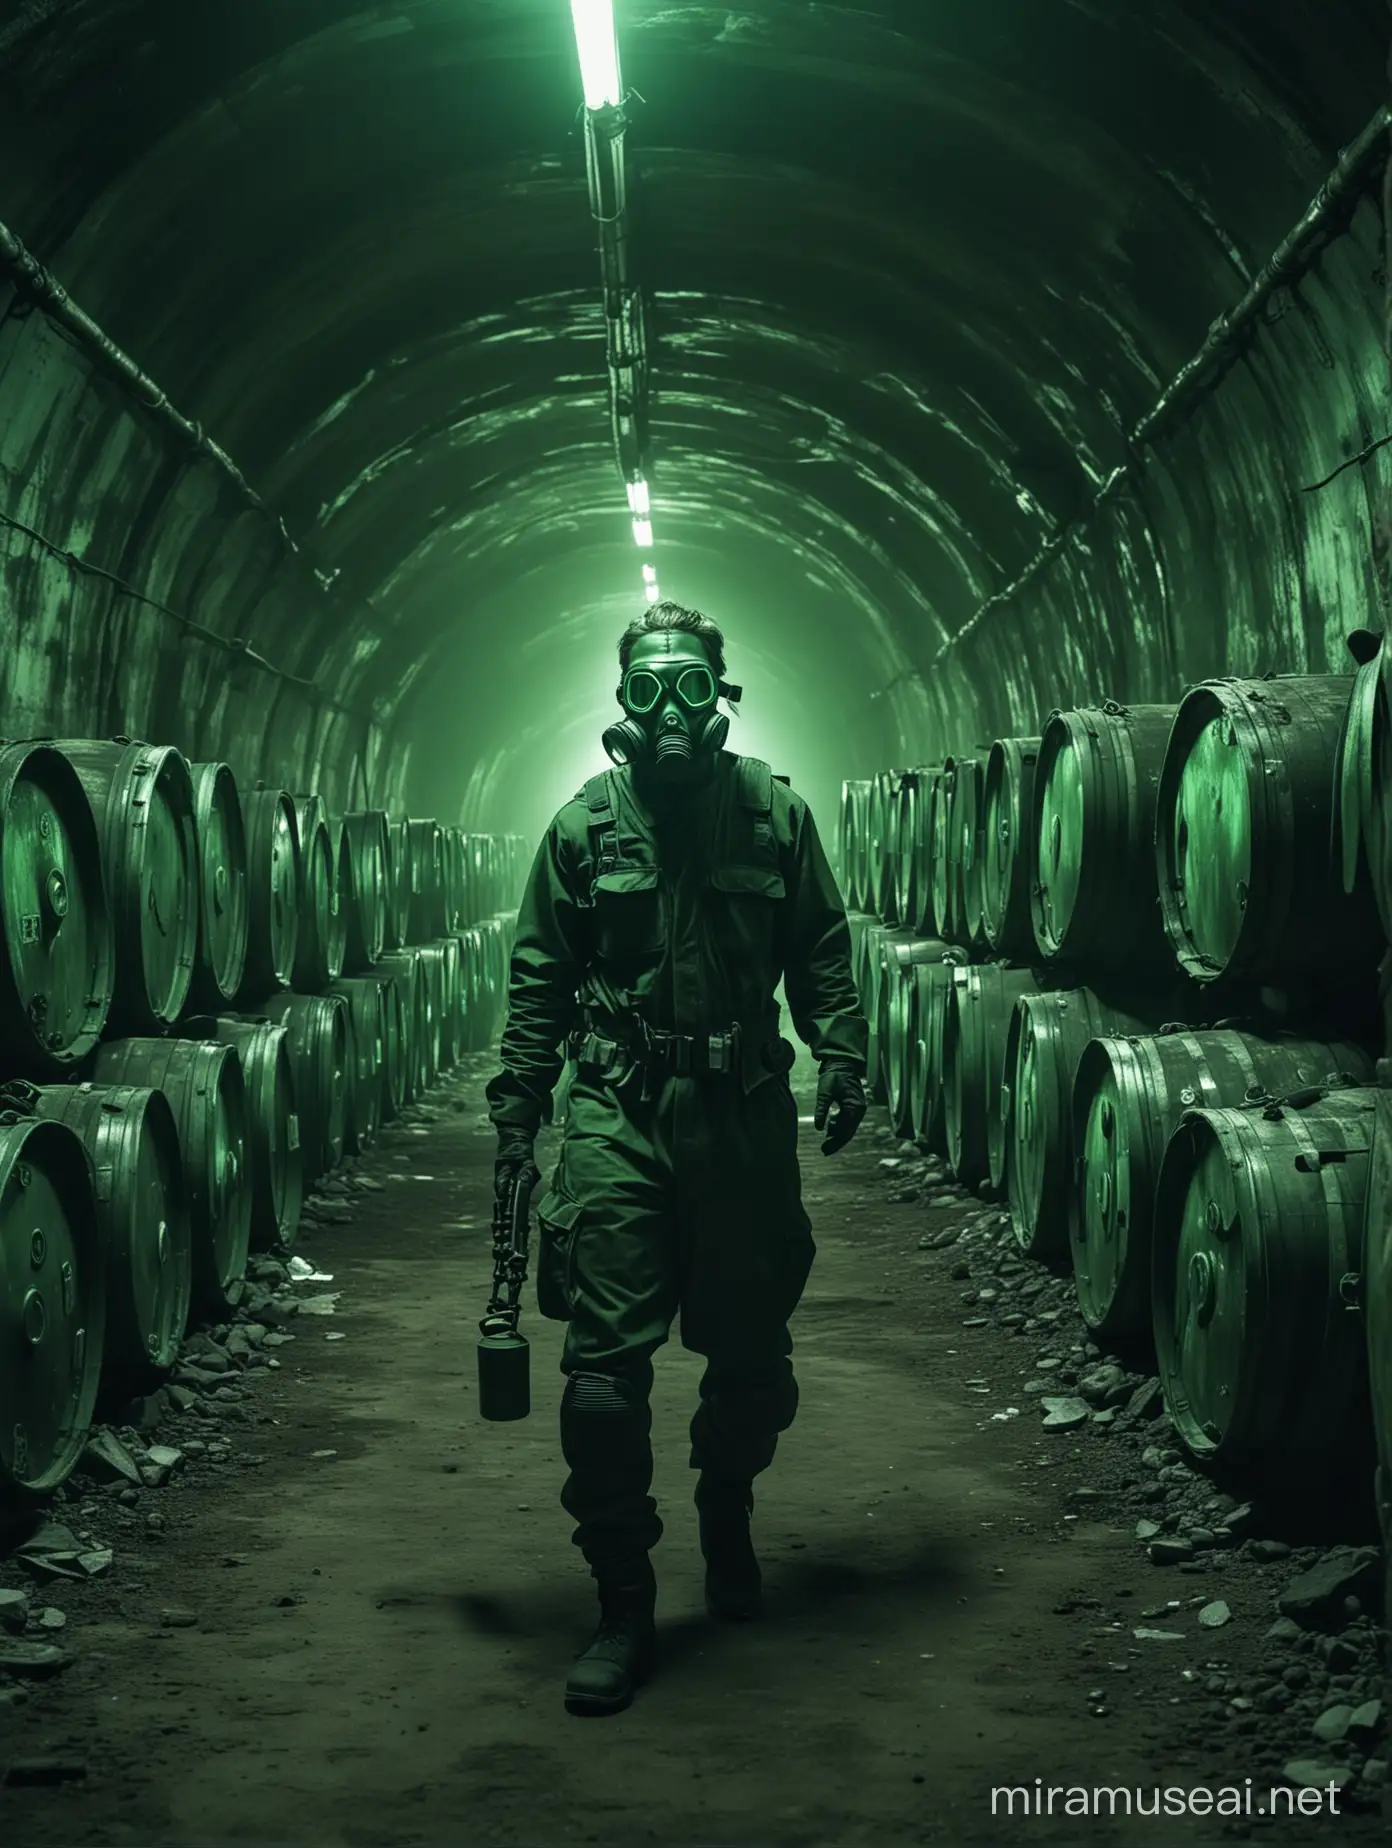 green neon toxic background, barrels, gas mask, vibrant color green, no person, no human, background futuristic tunnel
